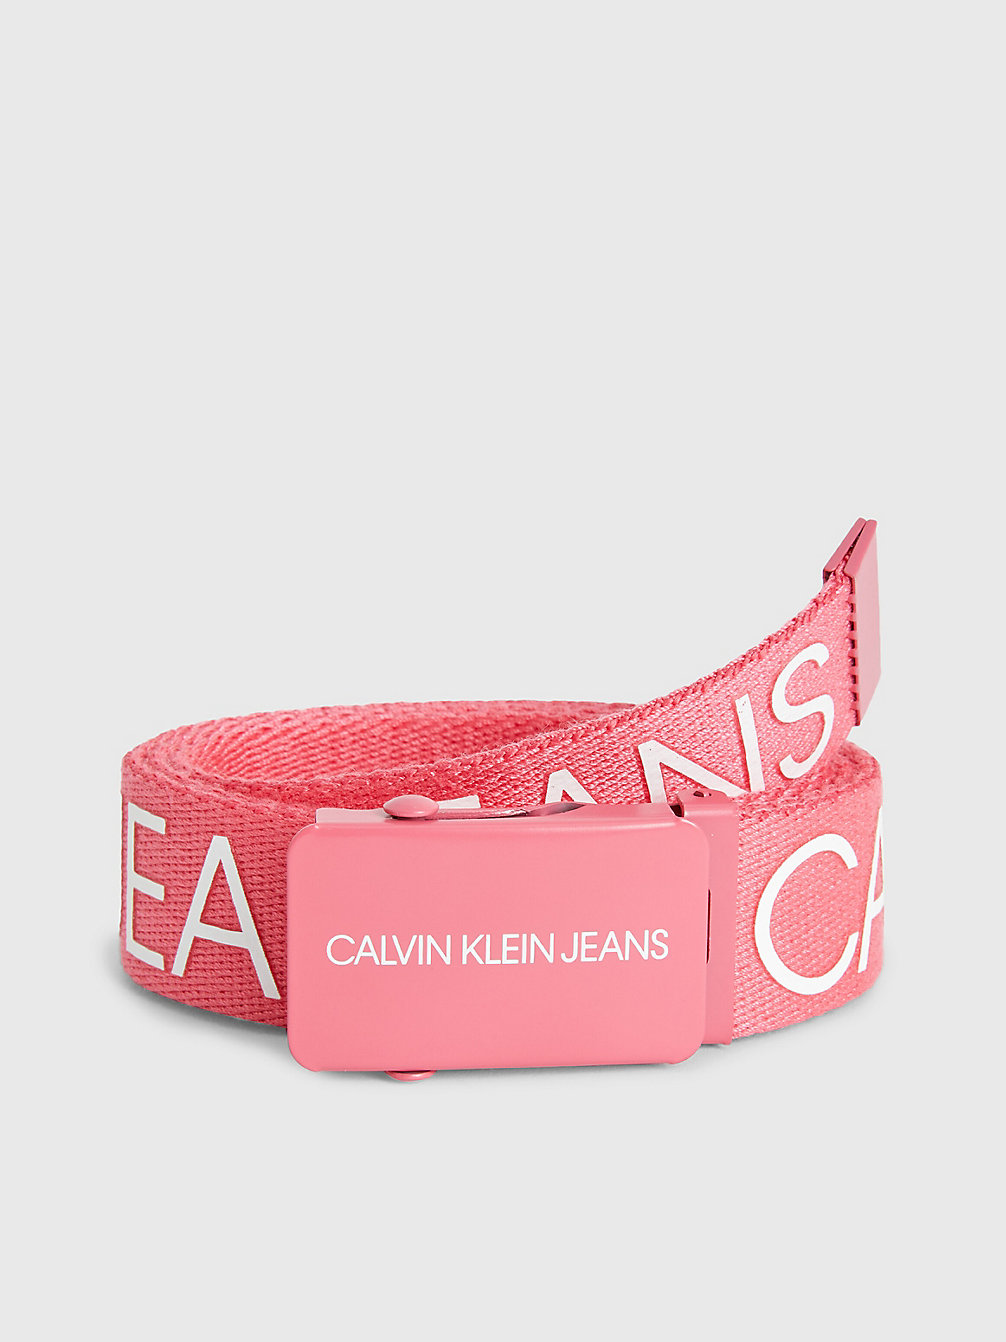 Cinturón Infantil De Lona Con Logo > PINK FLASH > undefined nina > Calvin Klein